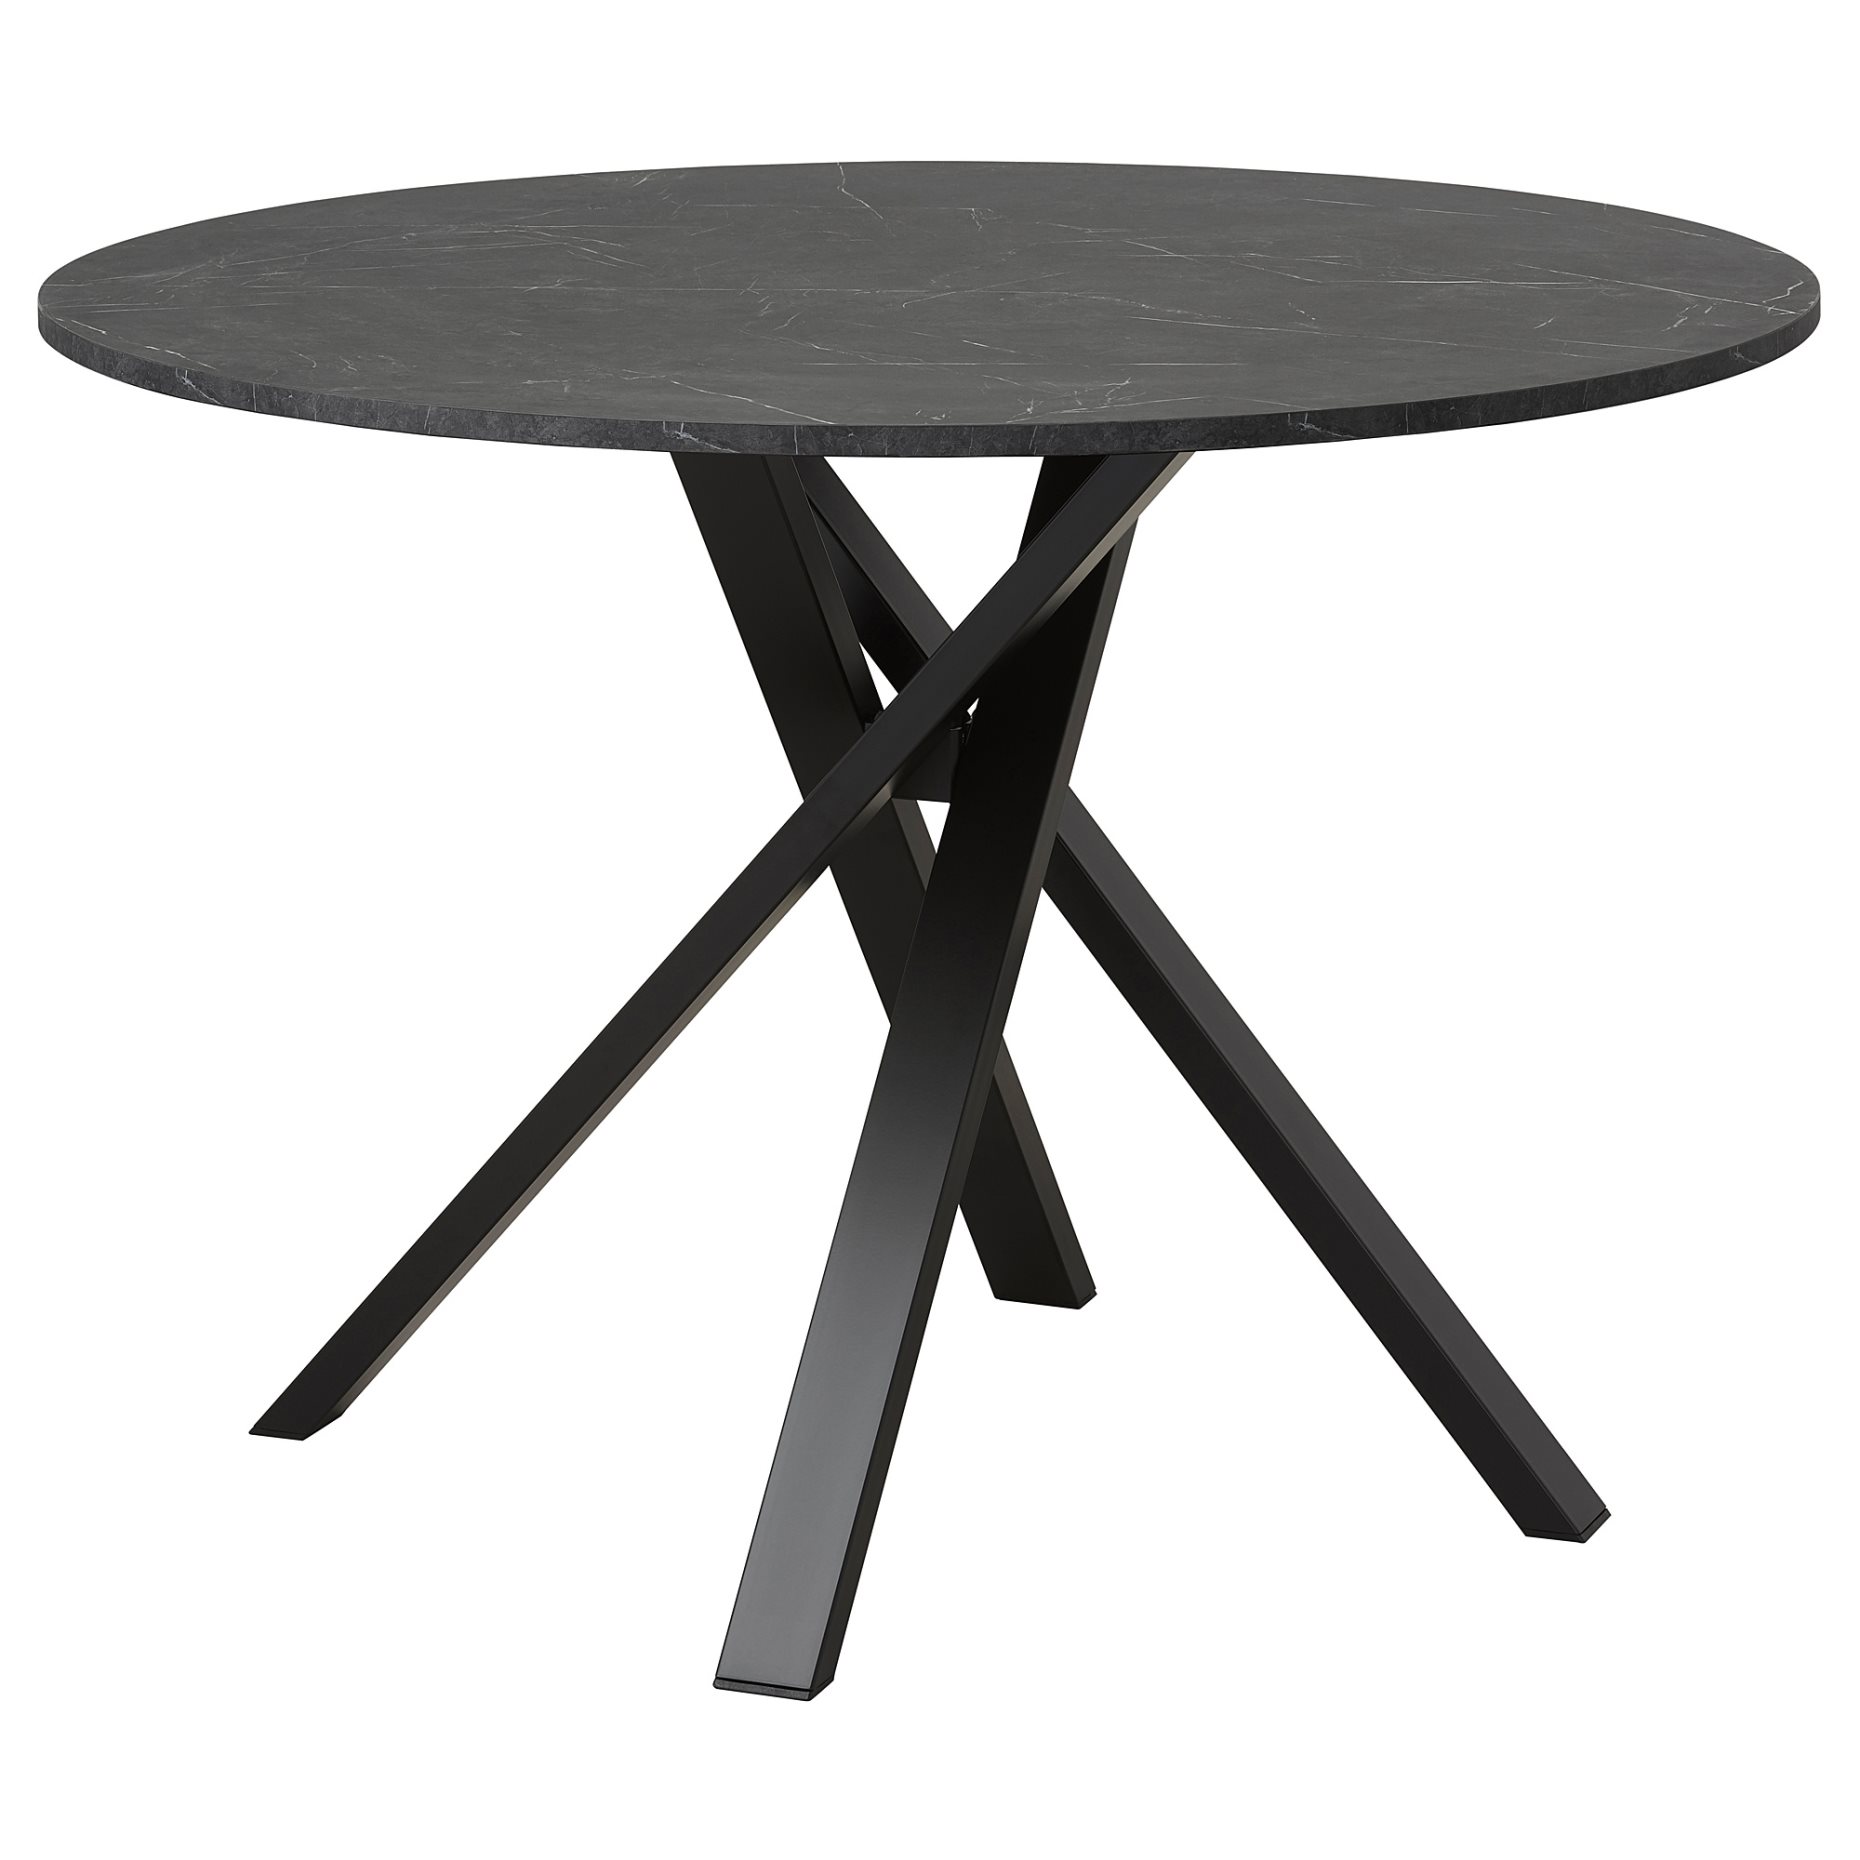 MARIEDAMM, τραπέζι, 105 cm, 704.926.45